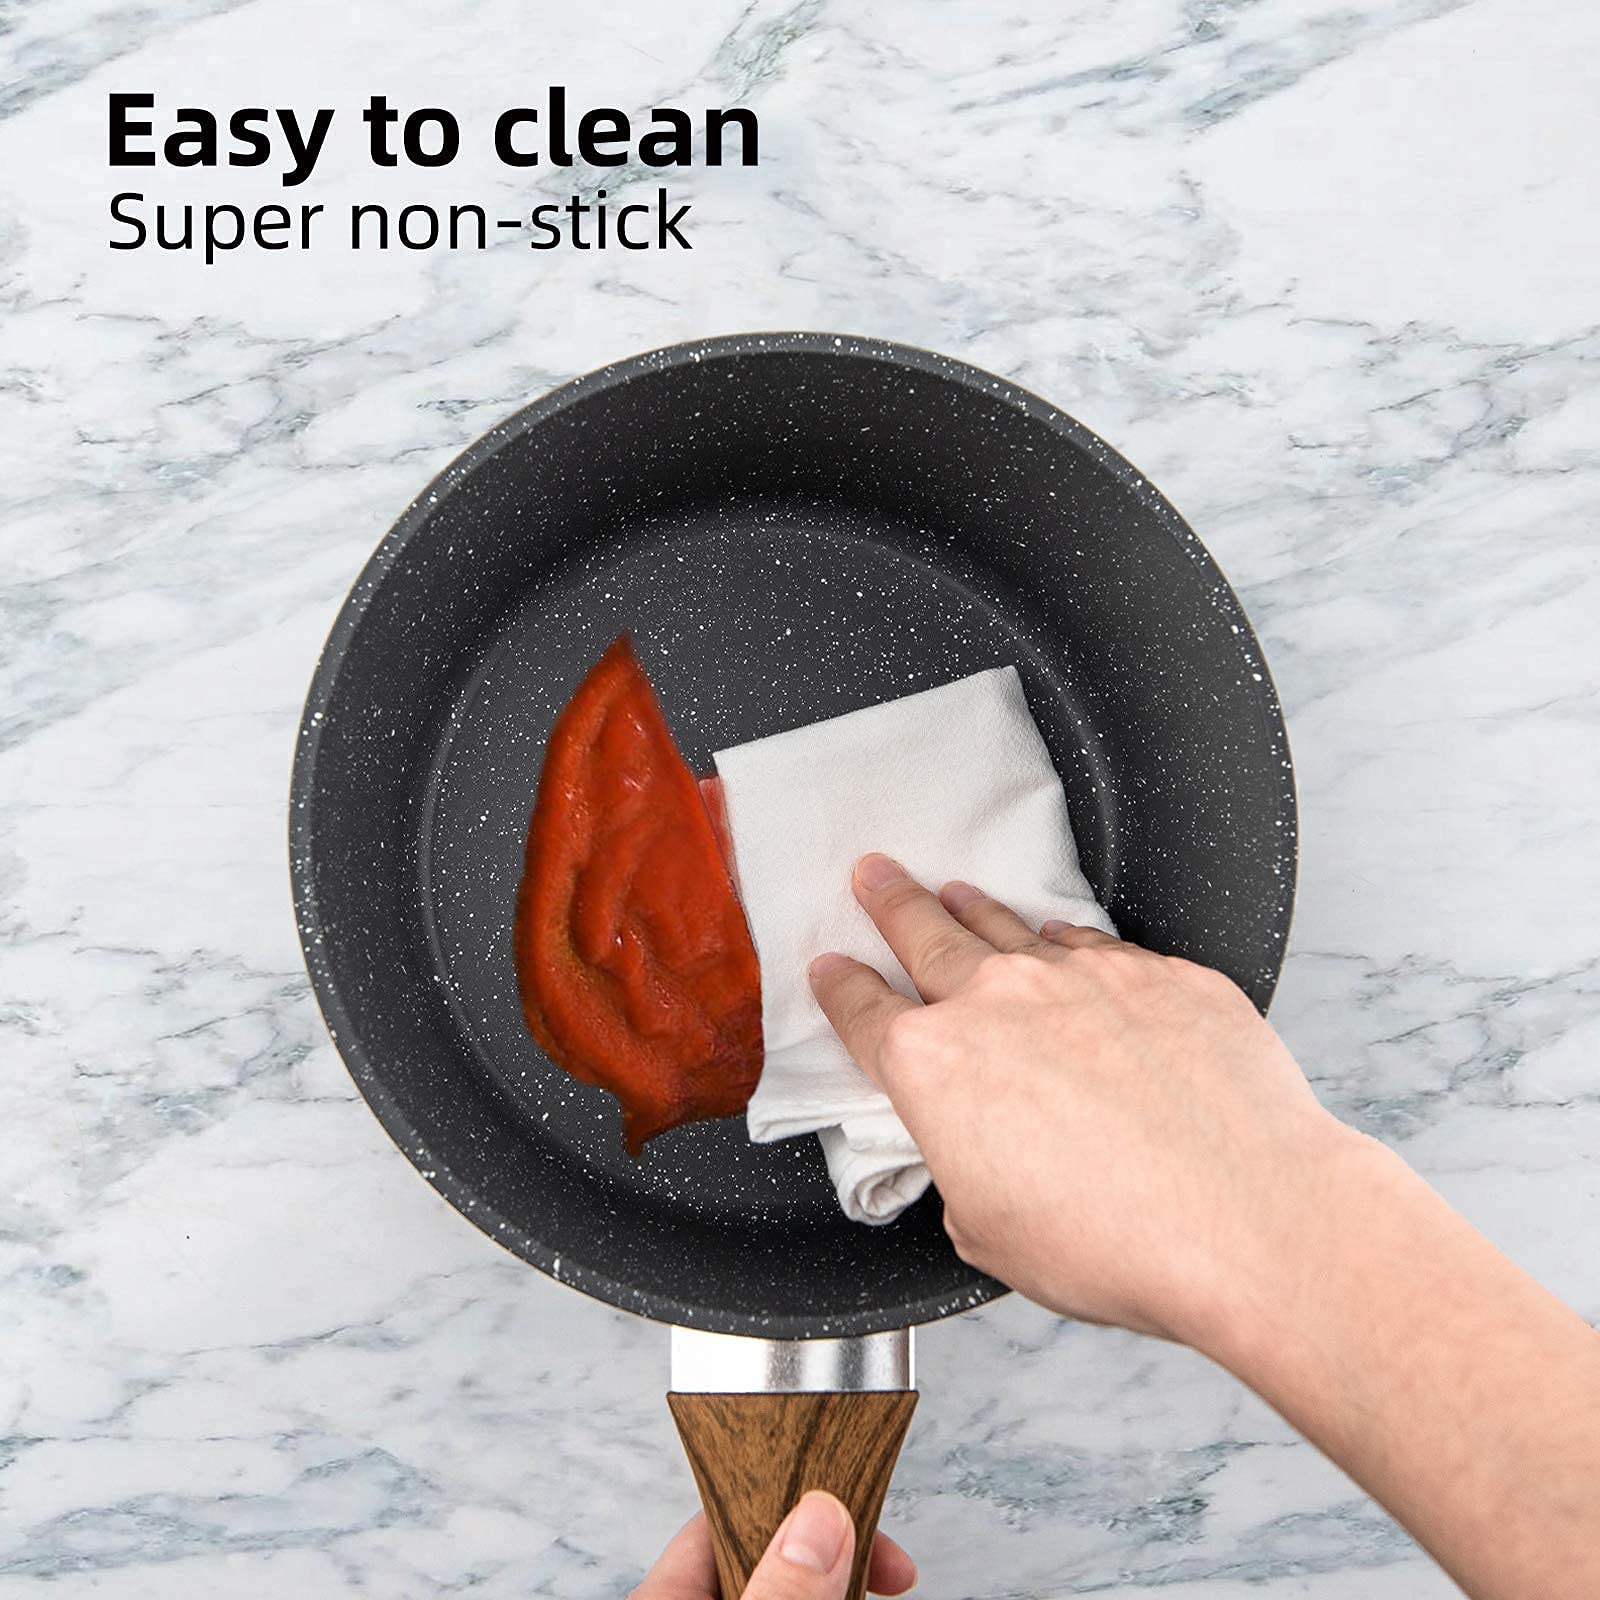 20cm Non-Stick Egg Frying Pan